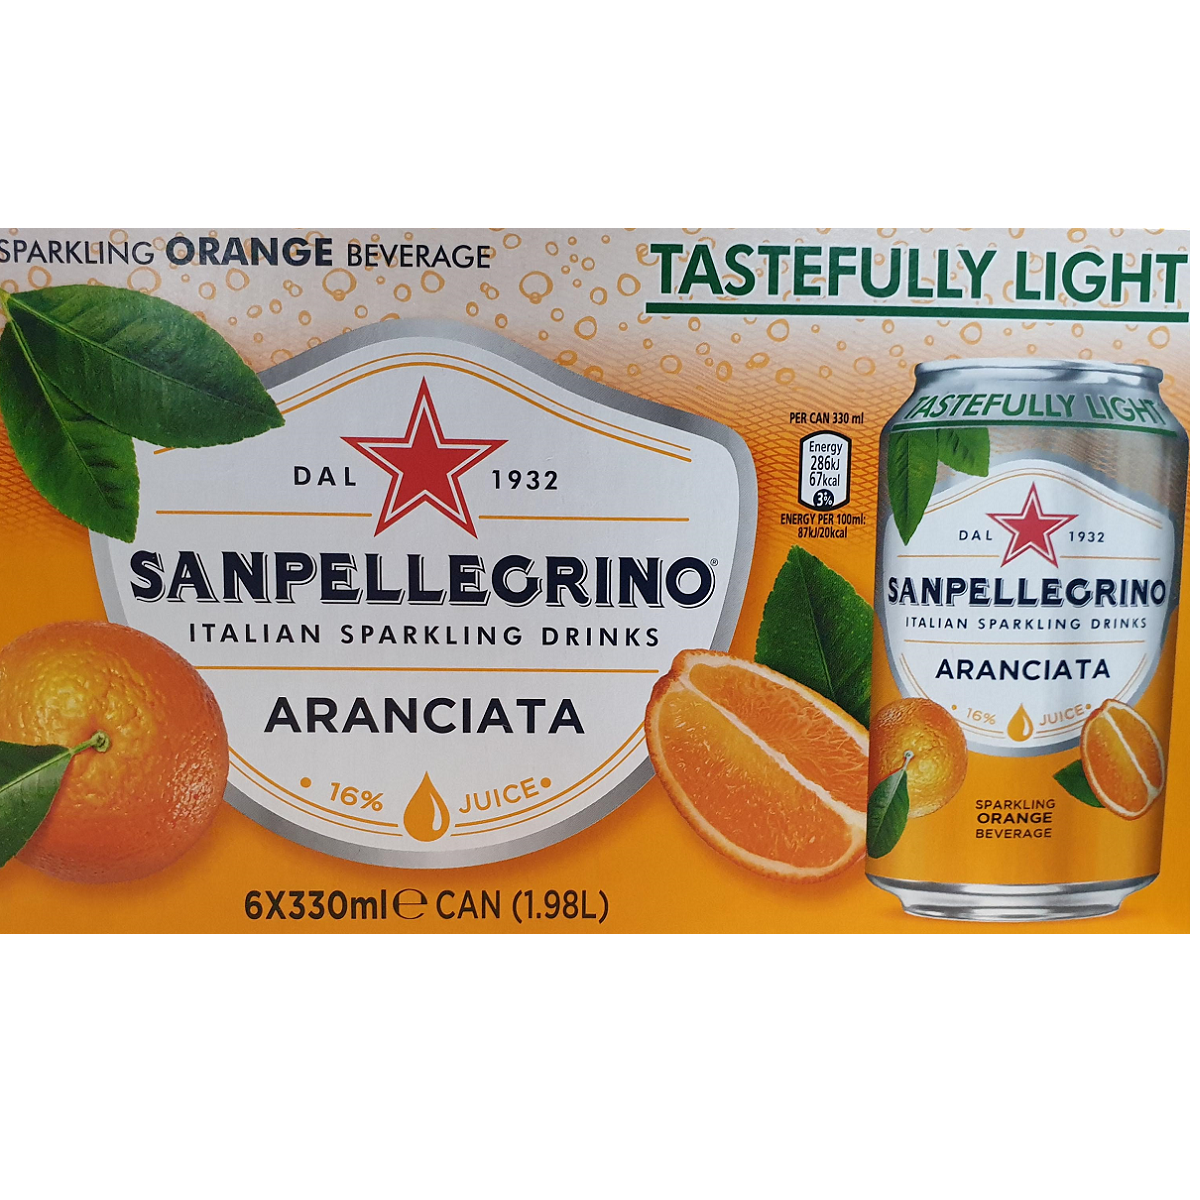 Sanpellegrino Italian Sparkling Drinks Aranciata 6x330ml